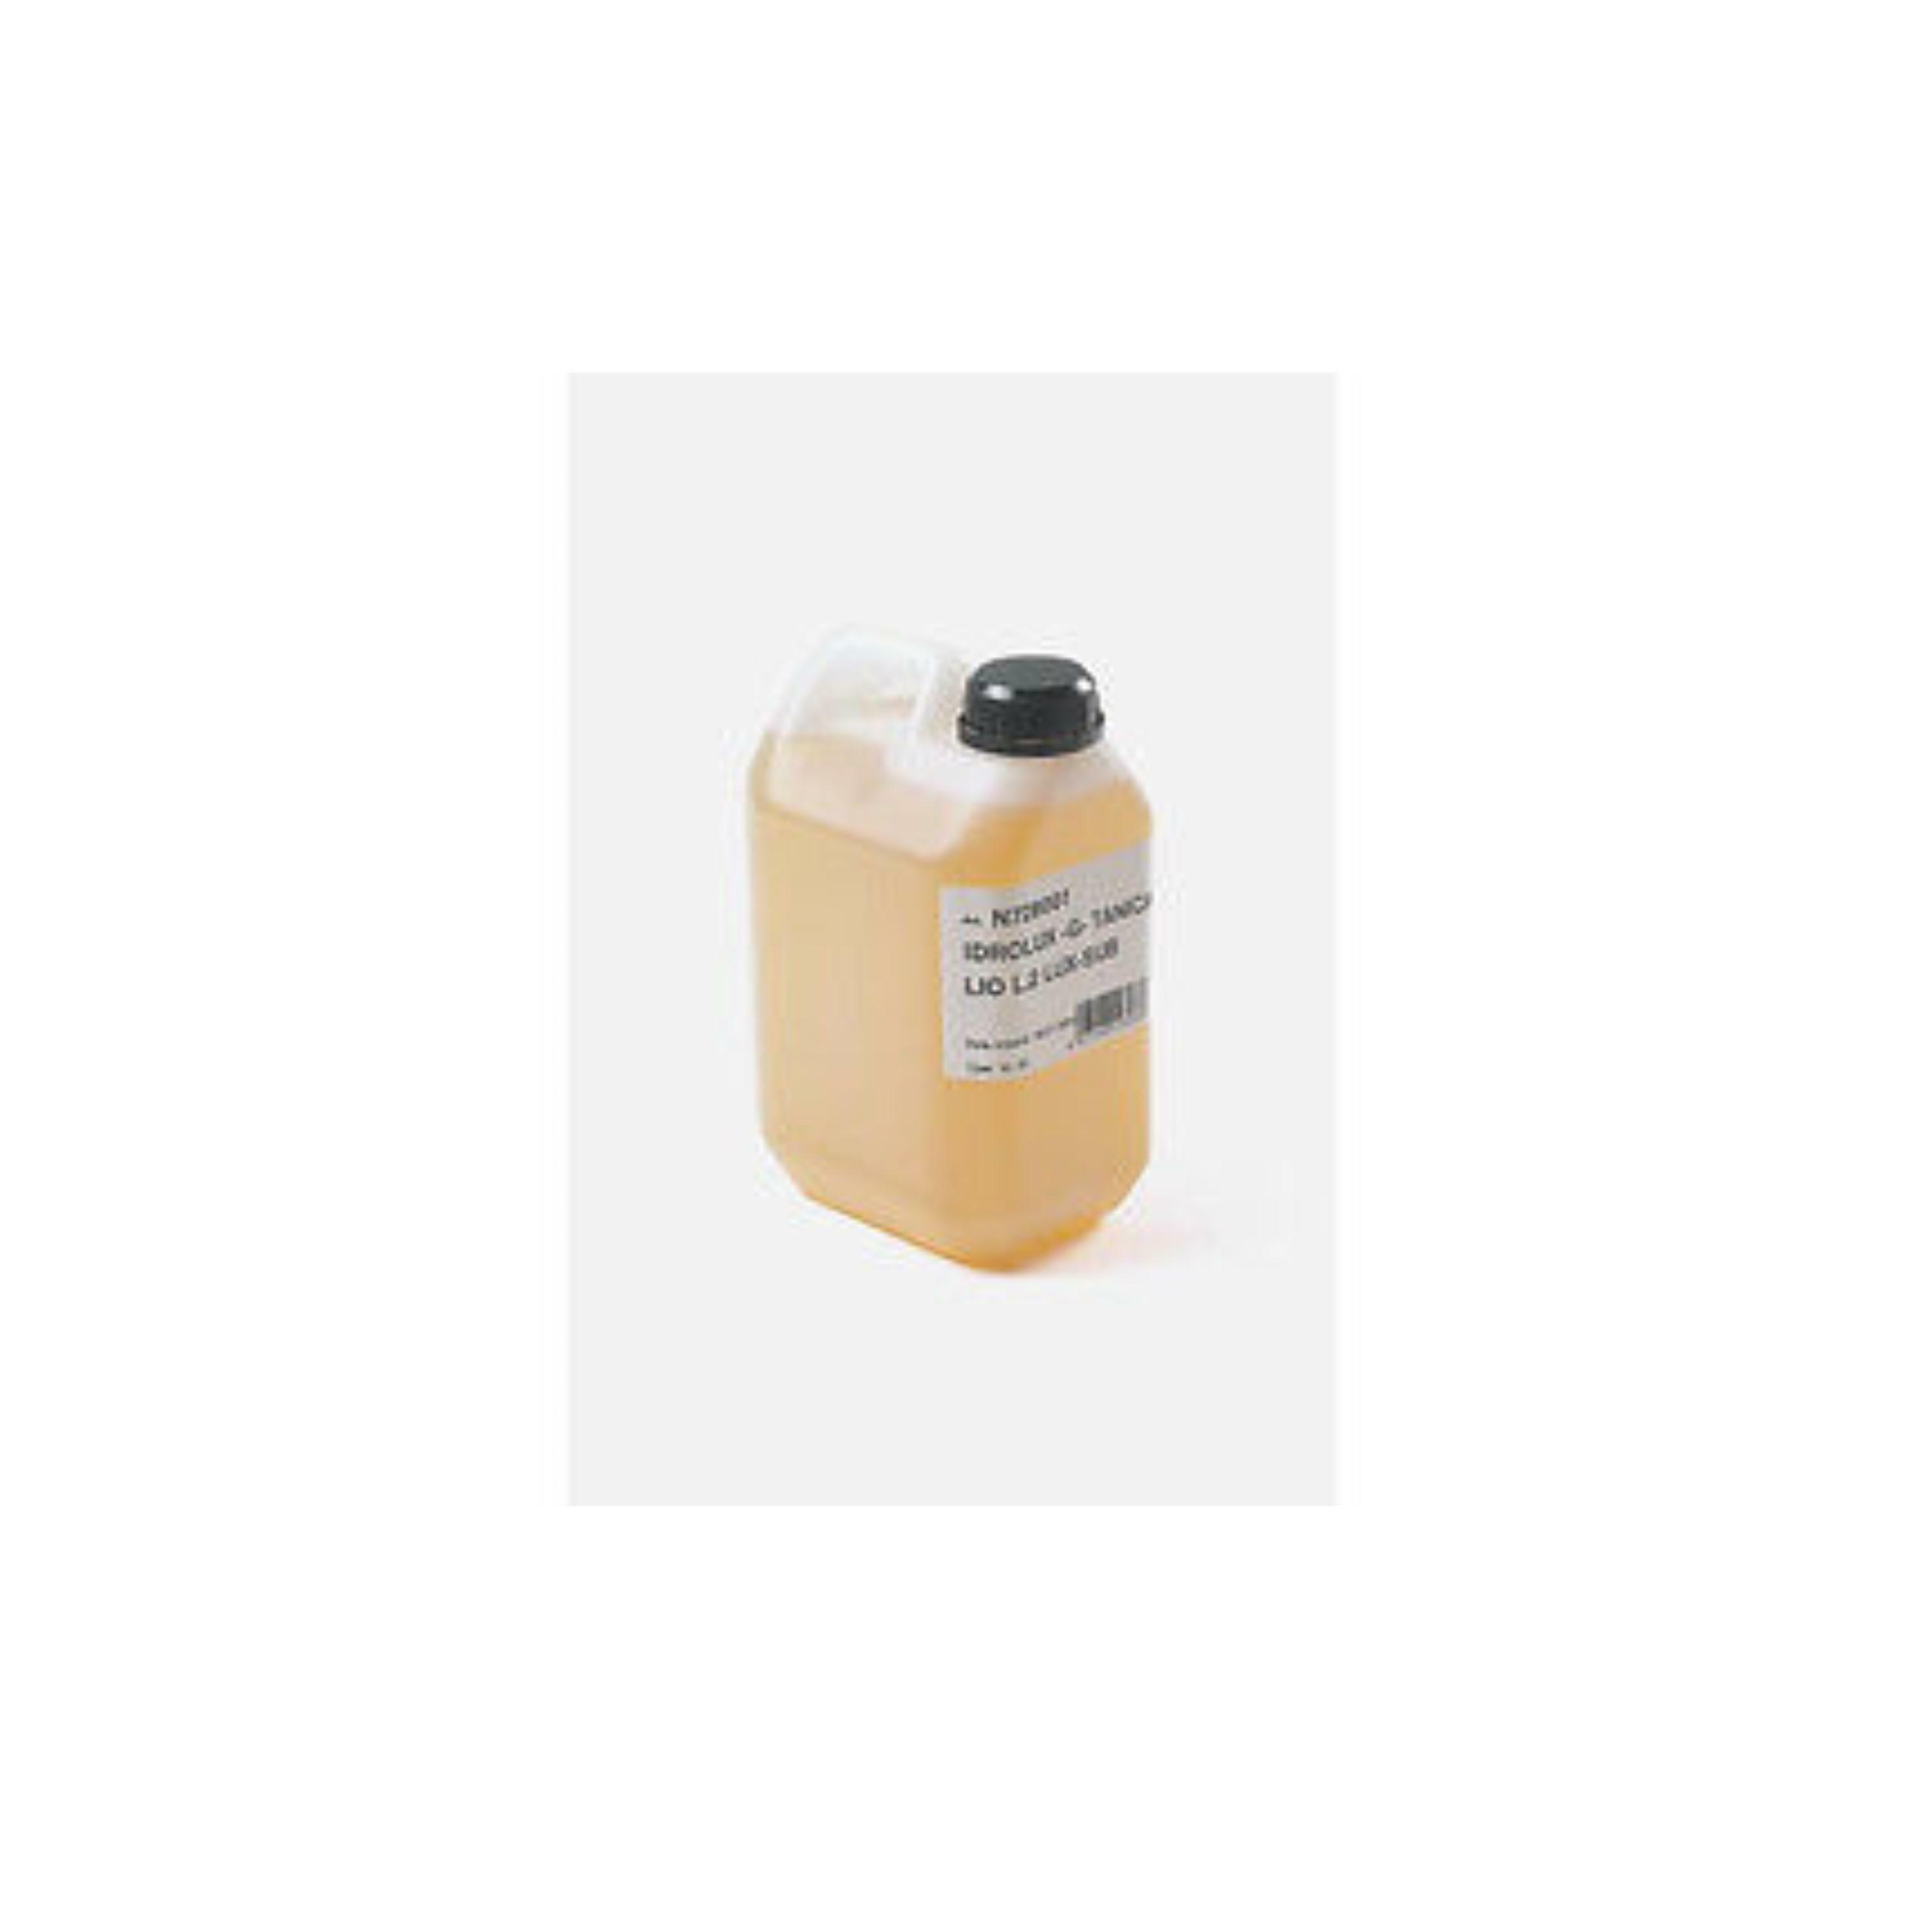 bft bft idrolux g olio idraulico i101151